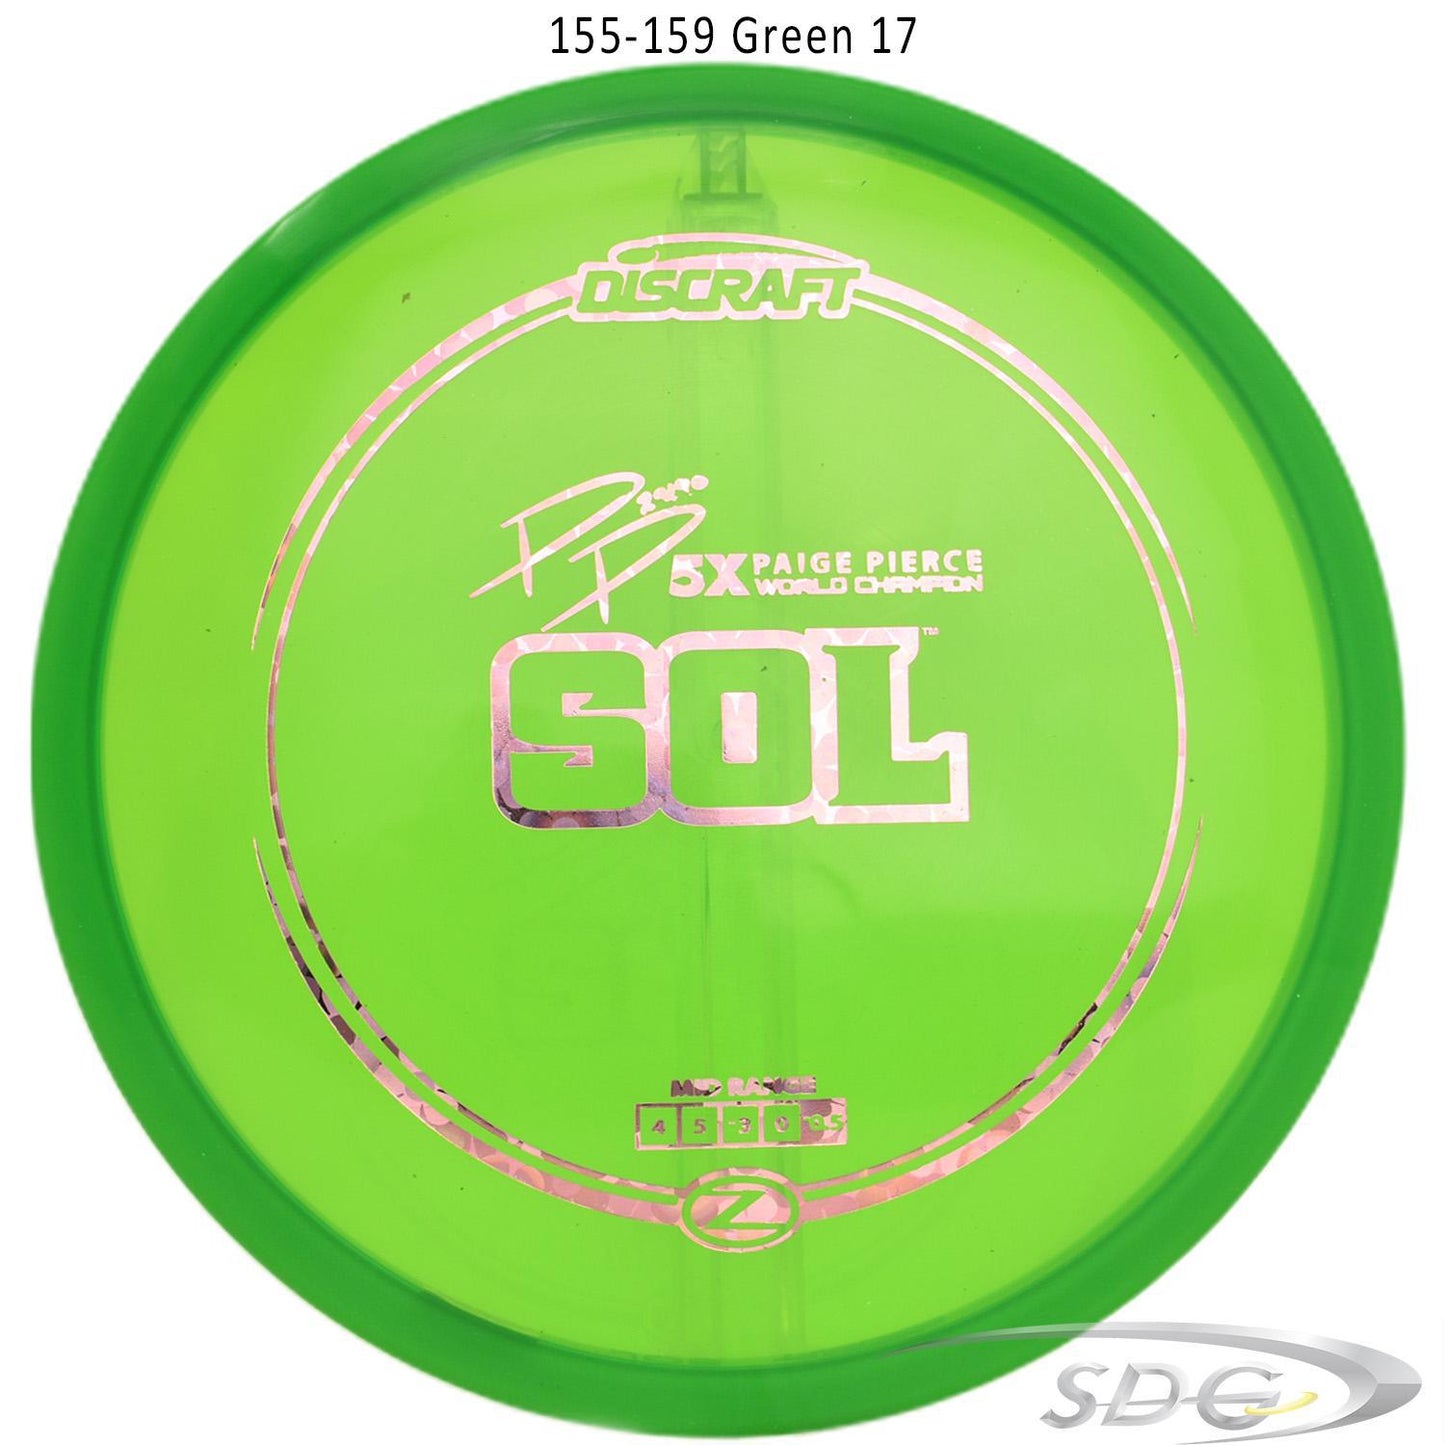 discraft-z-line-sol-paige-pierce-signature-disc-golf-mid-range-159-150-weights 155-159 Green 17 